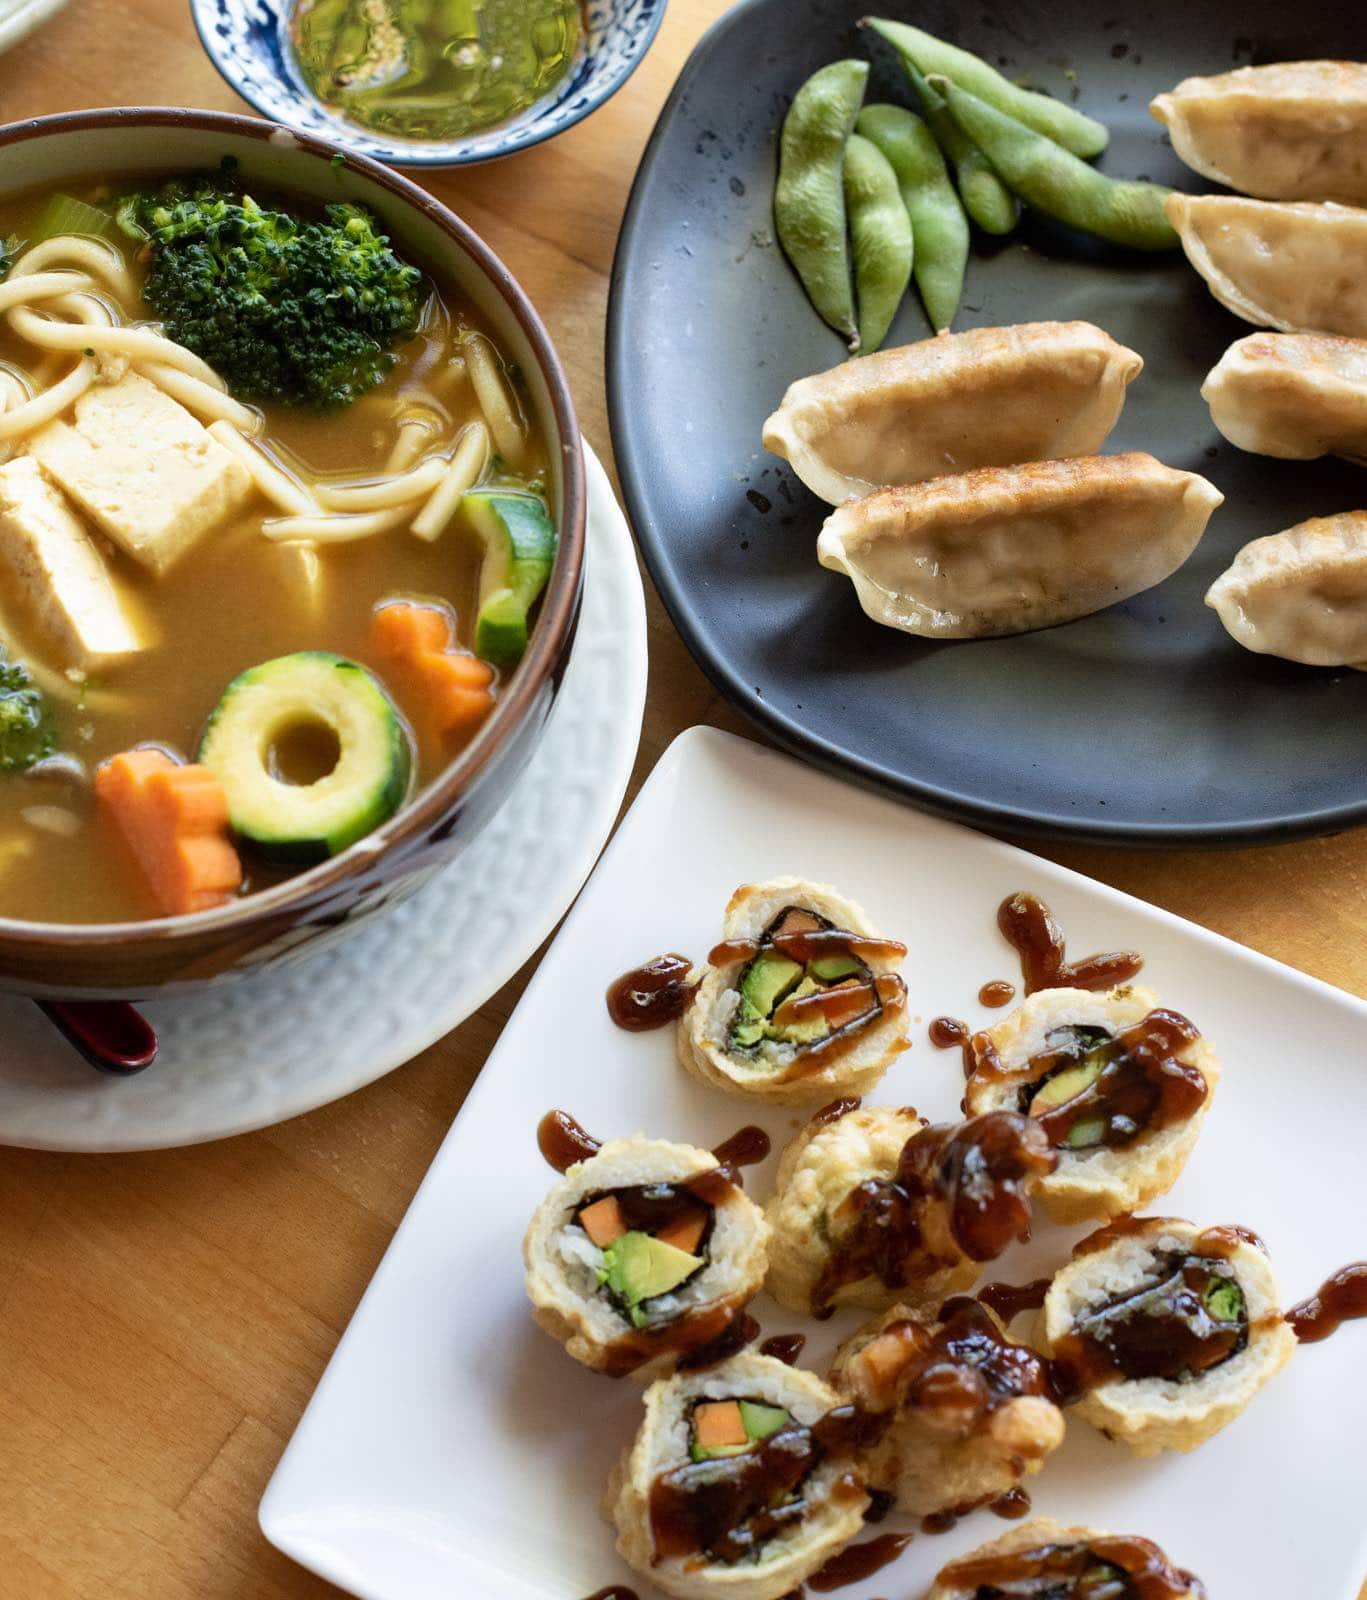 Vegan dishes from Cha-ya SF Vegan Japanese Restaurant in San Francisco.